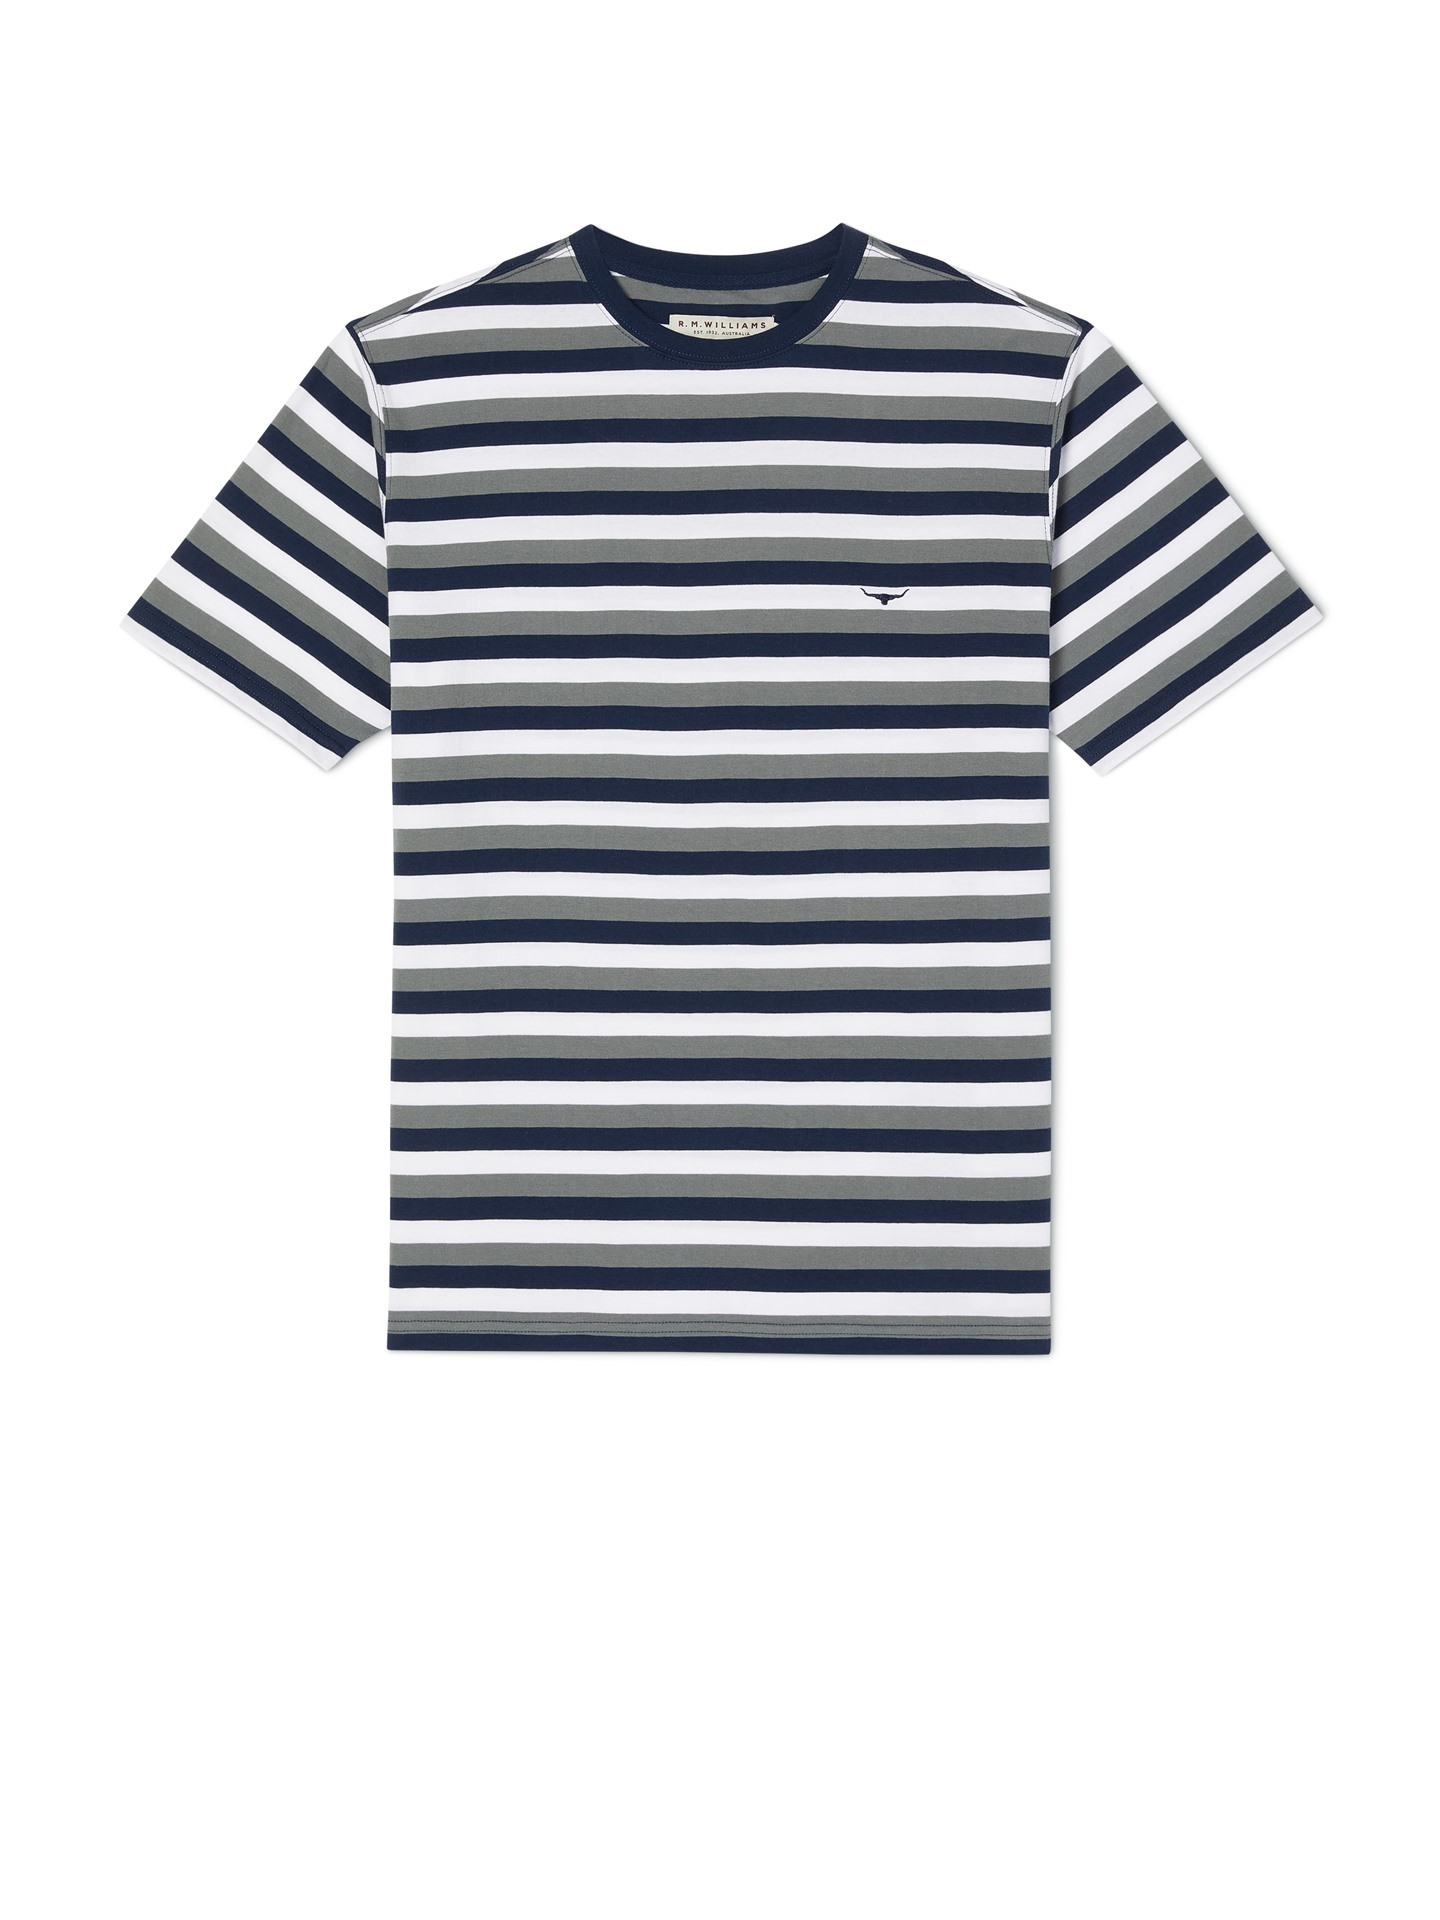 R.M Williams Parson T-Shirt - Navy/White/Khaki | Port Phillip Shop